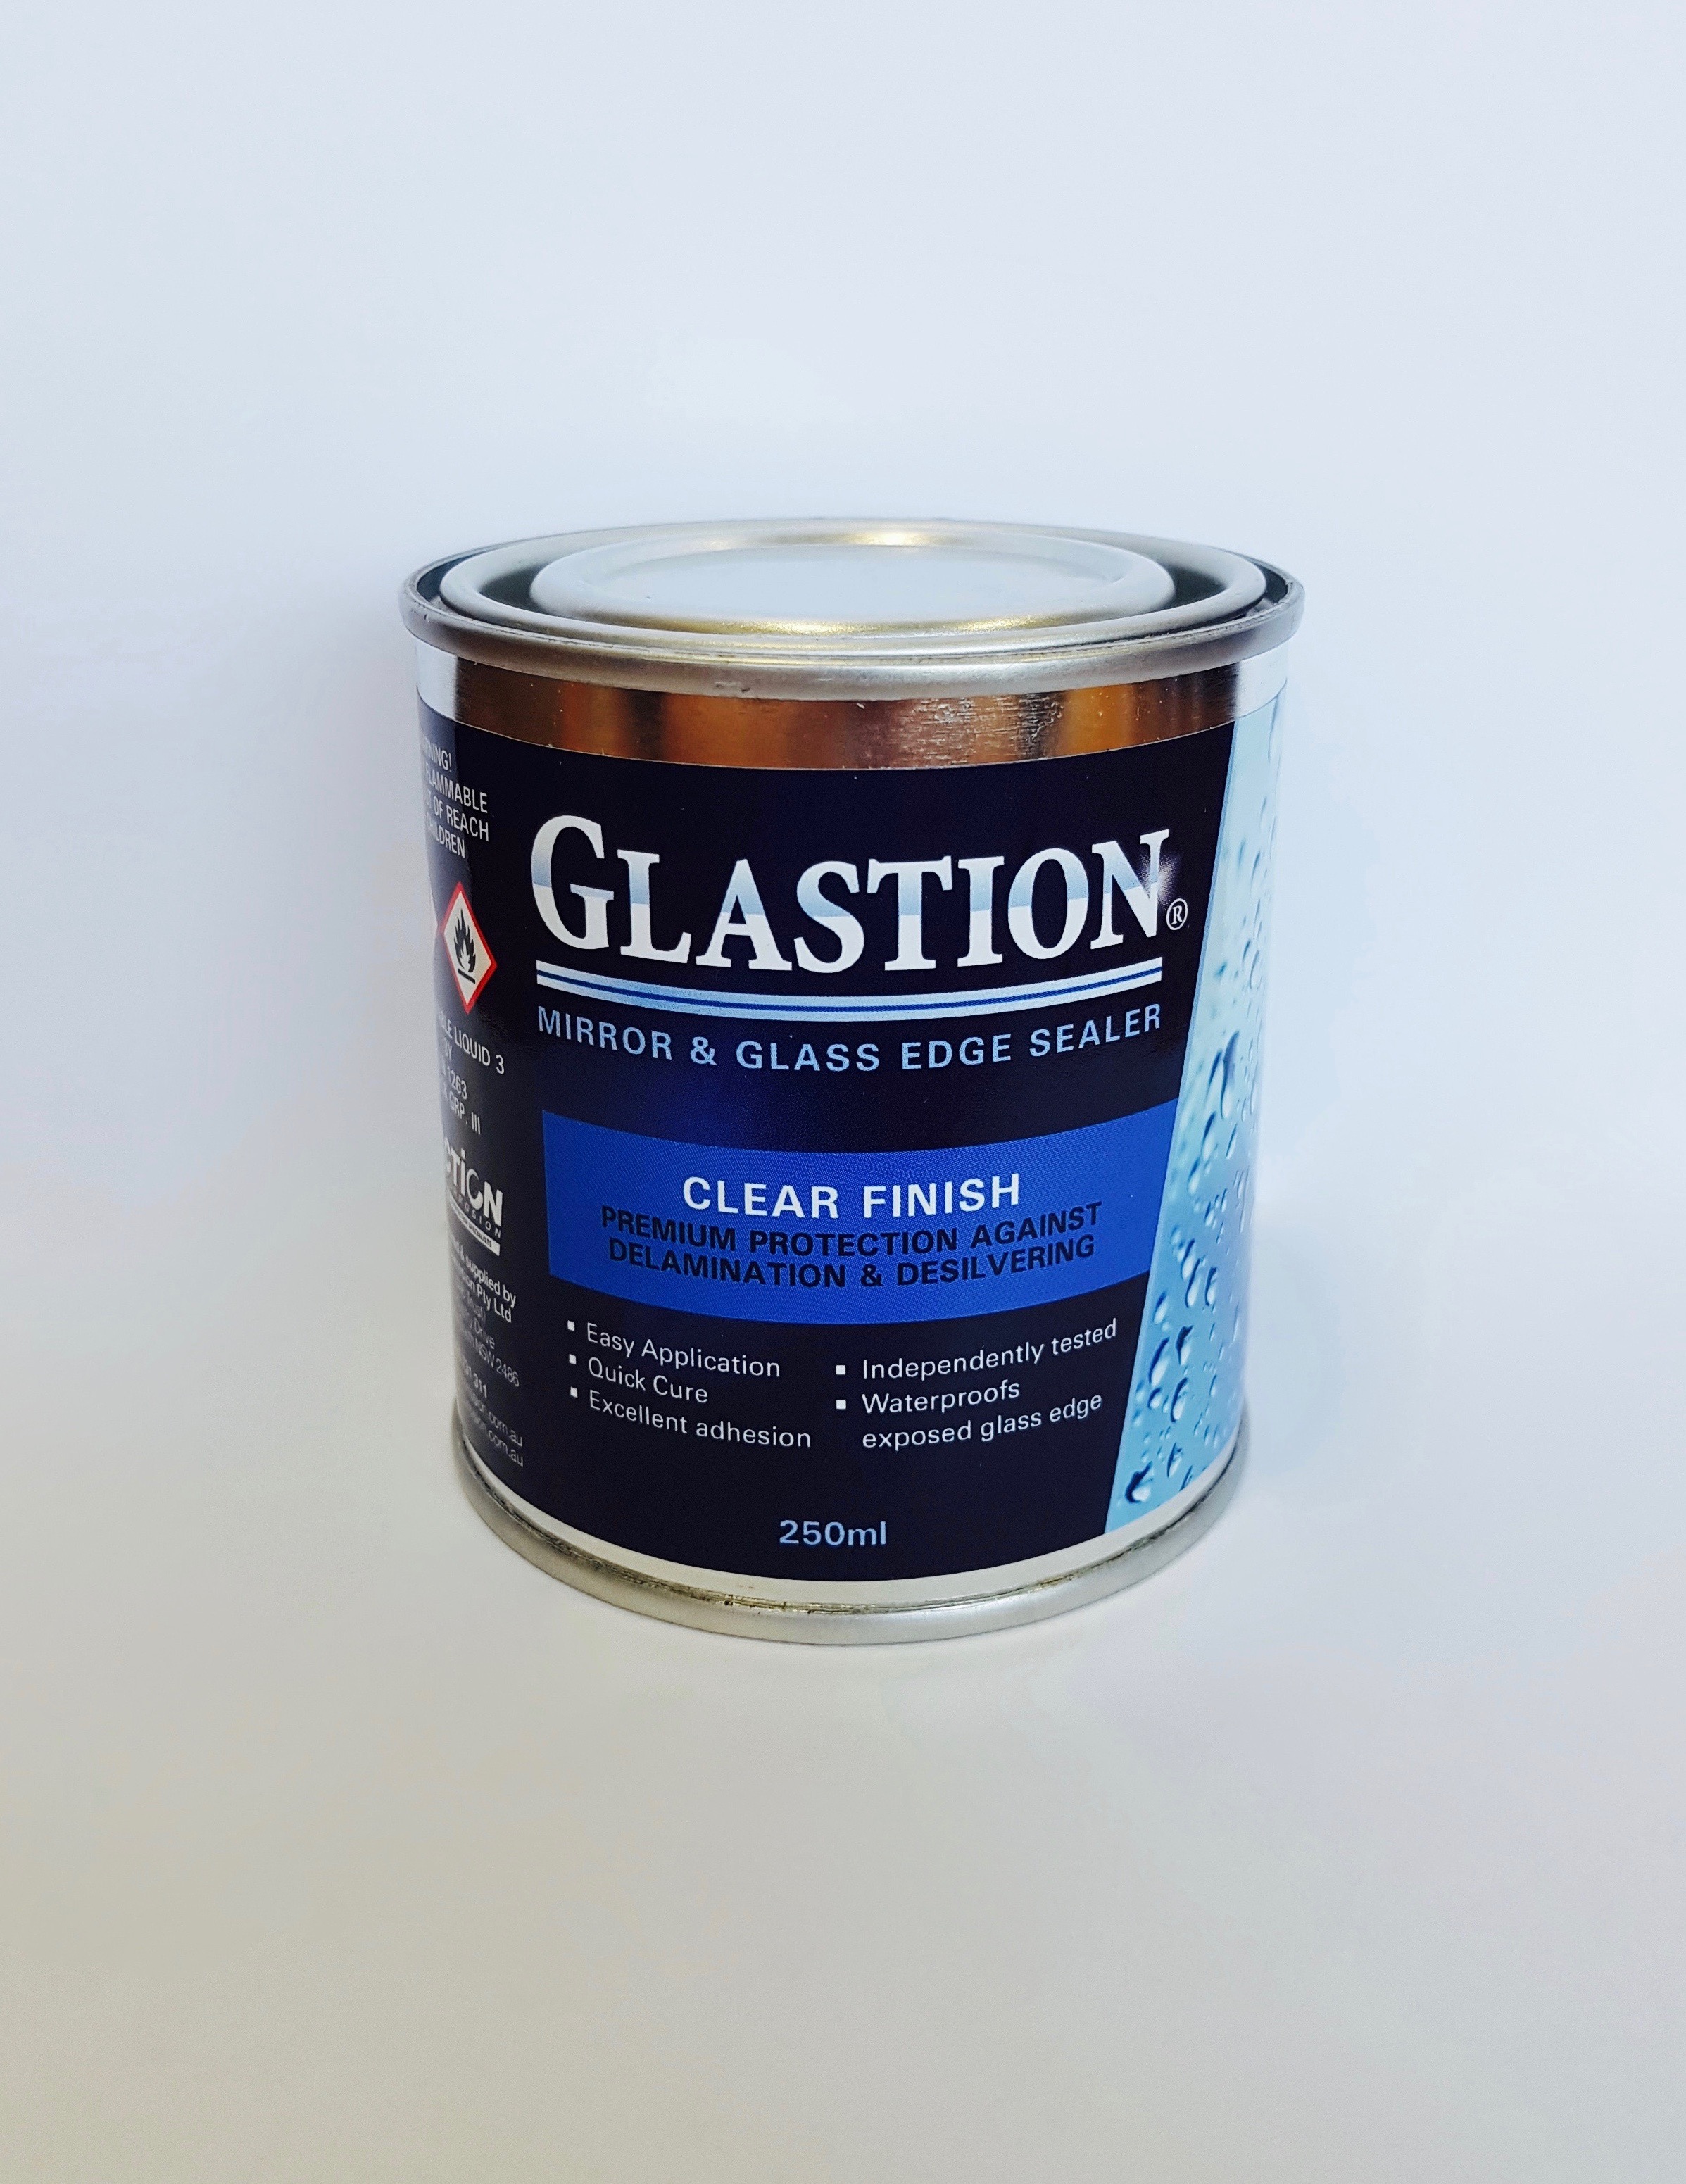 Glastion Glass Edge Sealer - Action CorrosionAction Corrosion